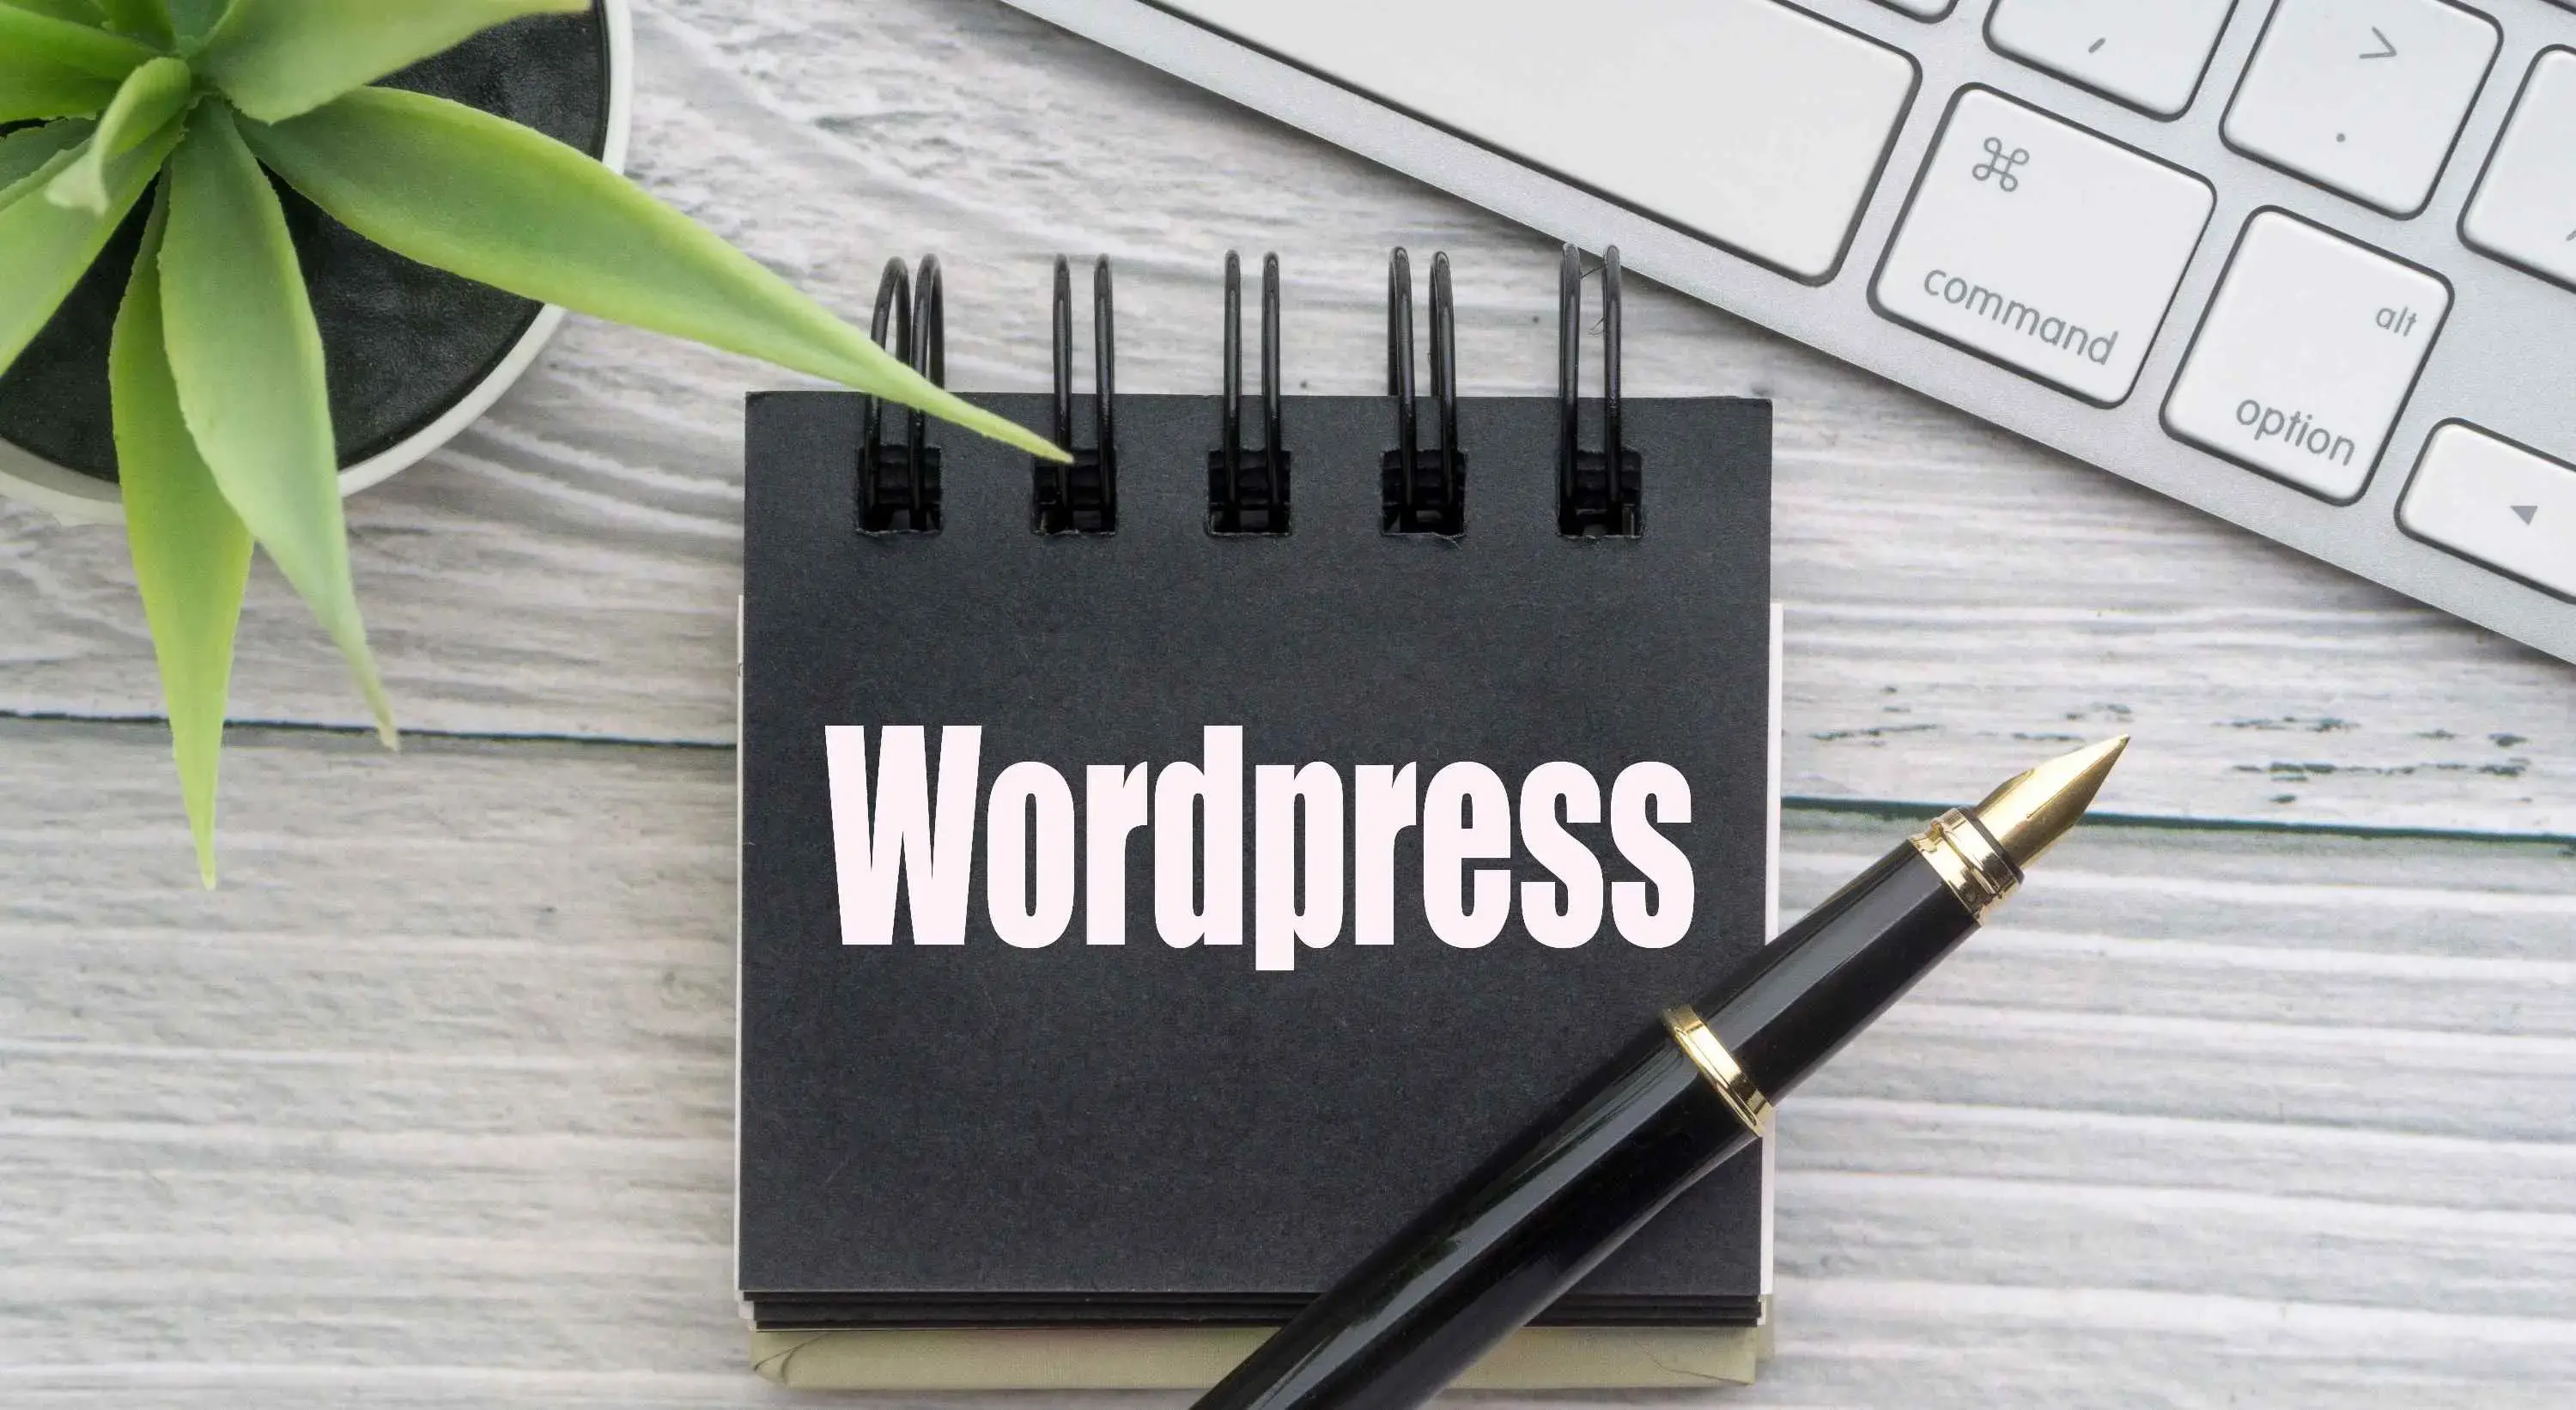 What is Headless WordPress?